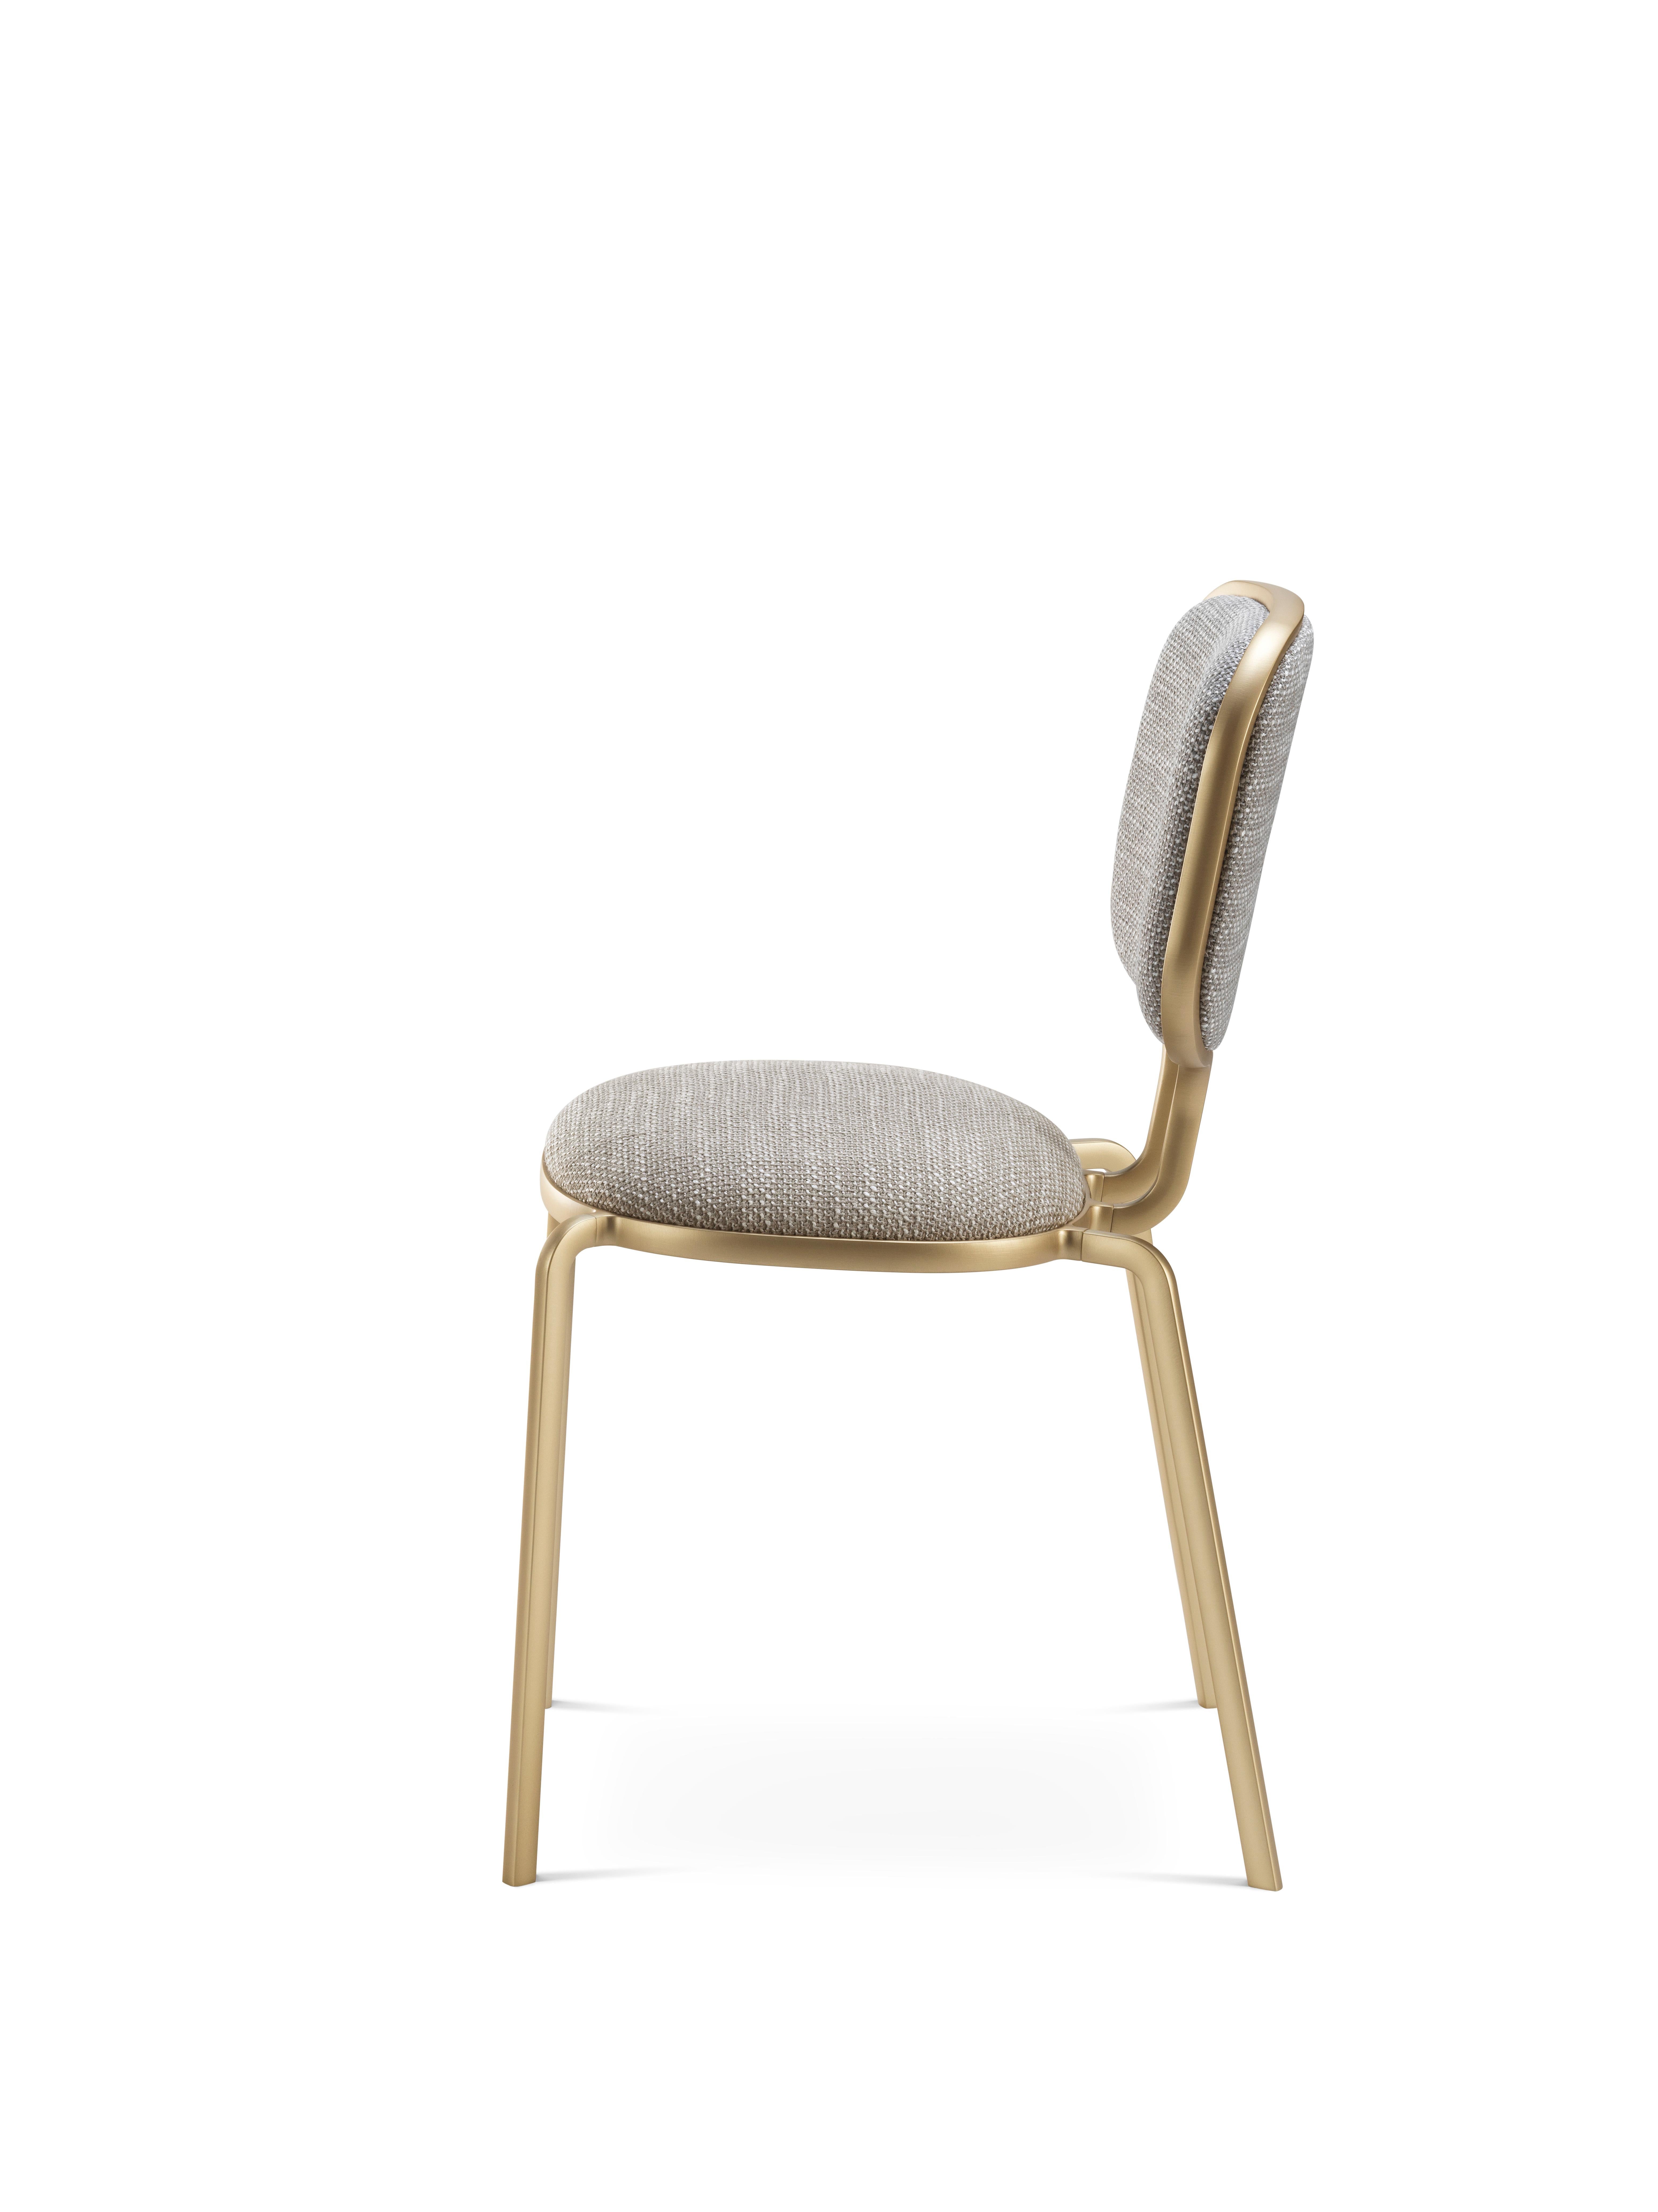 Italian Liù Chair Fabric Bogardine Colour 03 Perla, Satin Brass Structure, Made in Italy For Sale